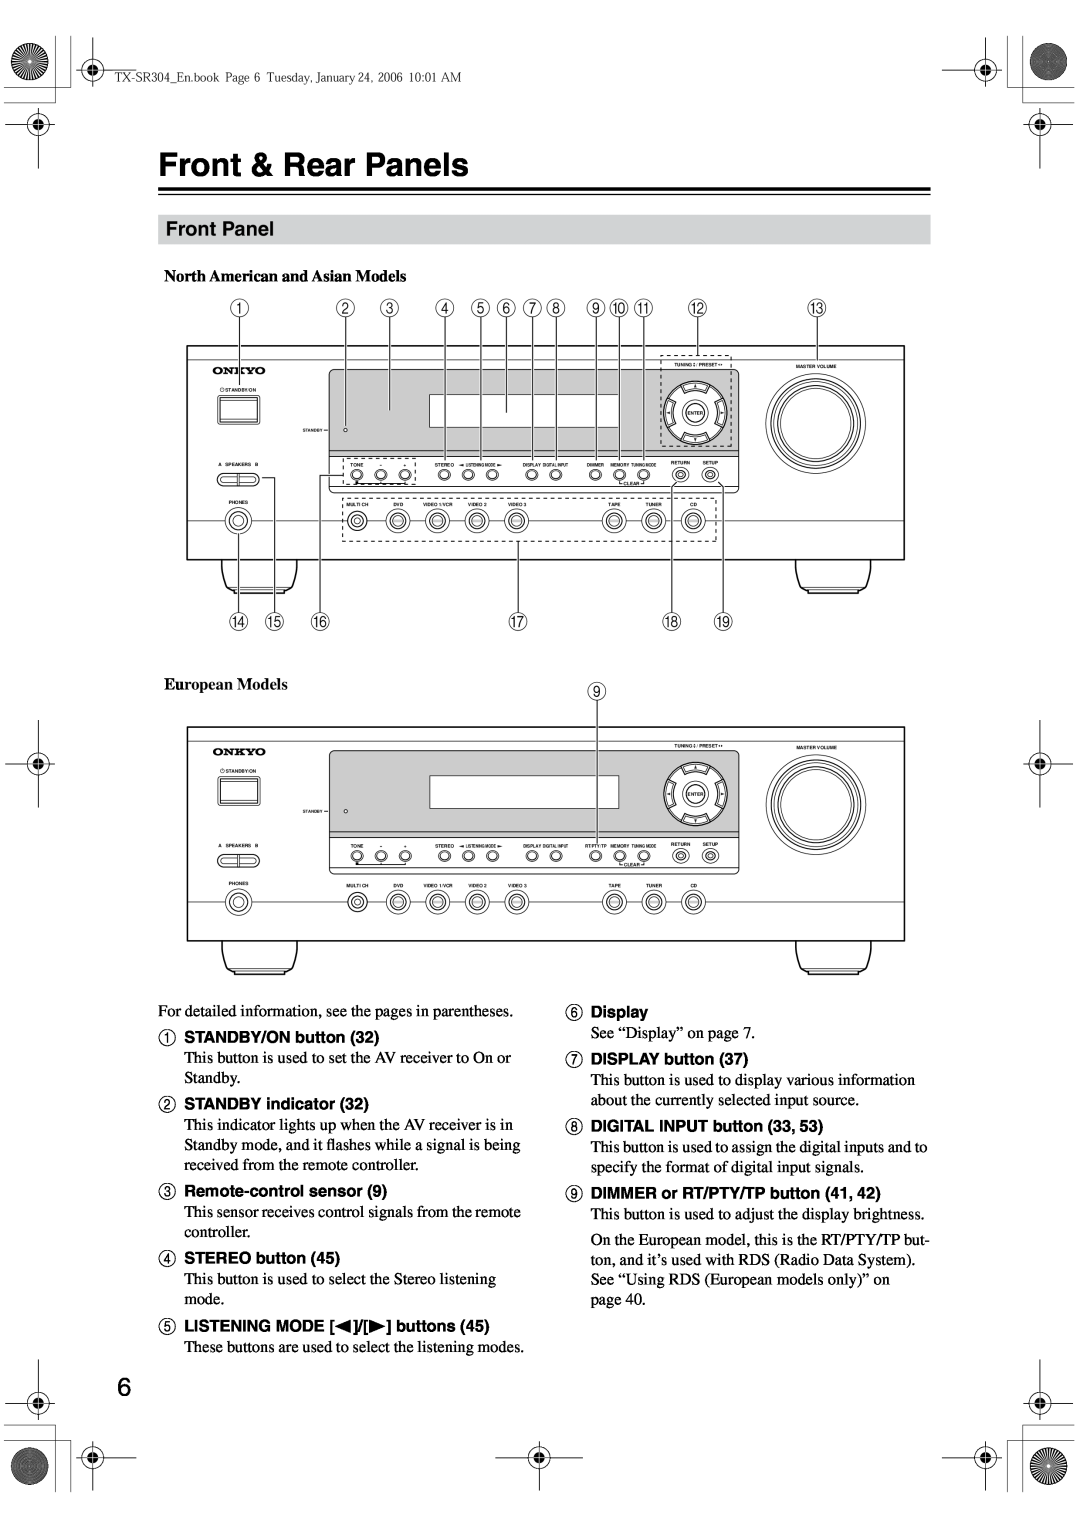 Onkyo TX-SR8440, TX-SR404, TX-SR304E instruction manual Front & Rear Panels, Front Panel, 4 5 6 78 9JK, N O P 